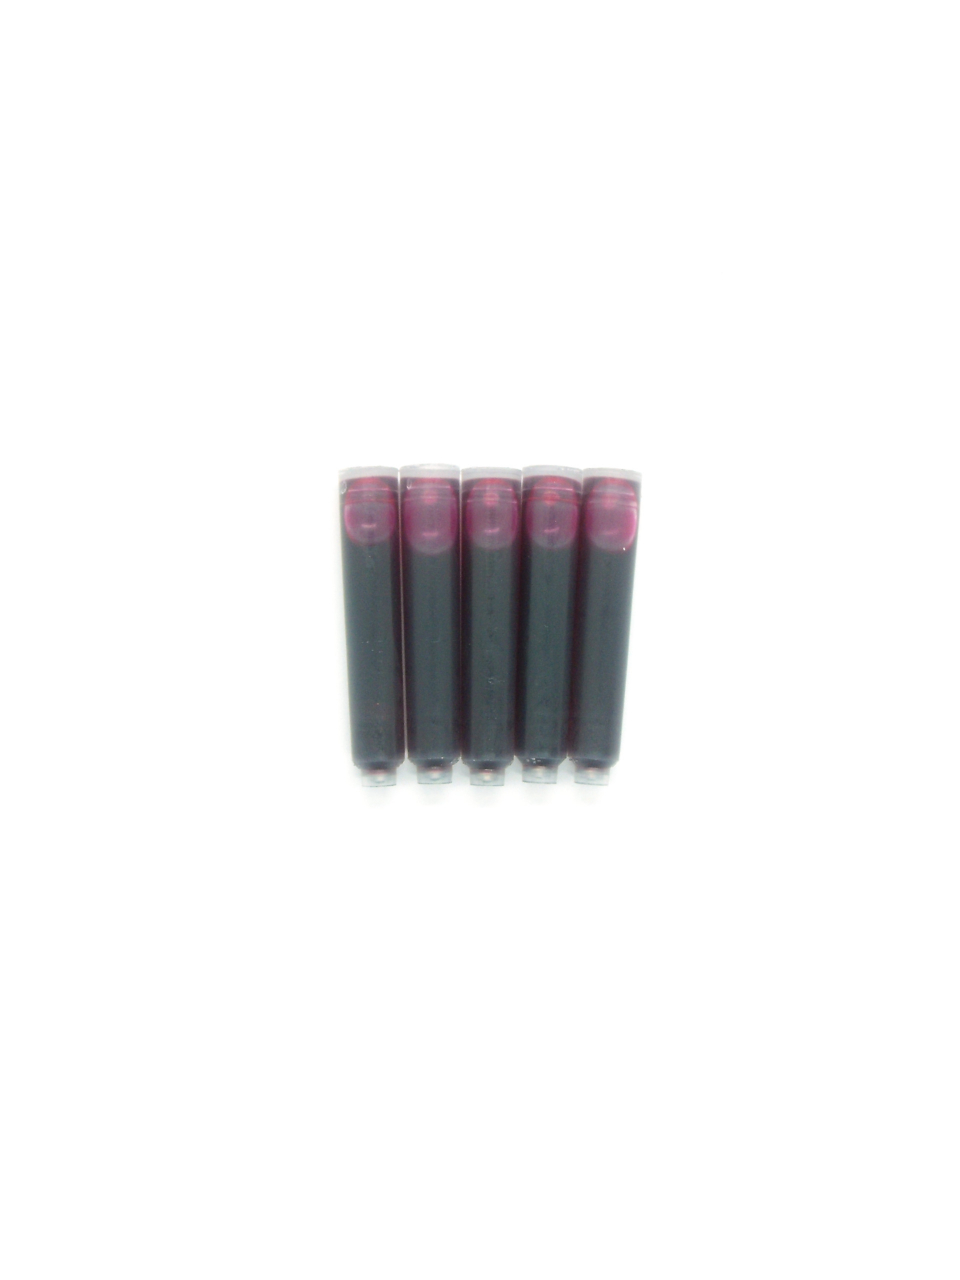 PenConverter Ink Cartridges For Cartier Fountain Pens (Pink)